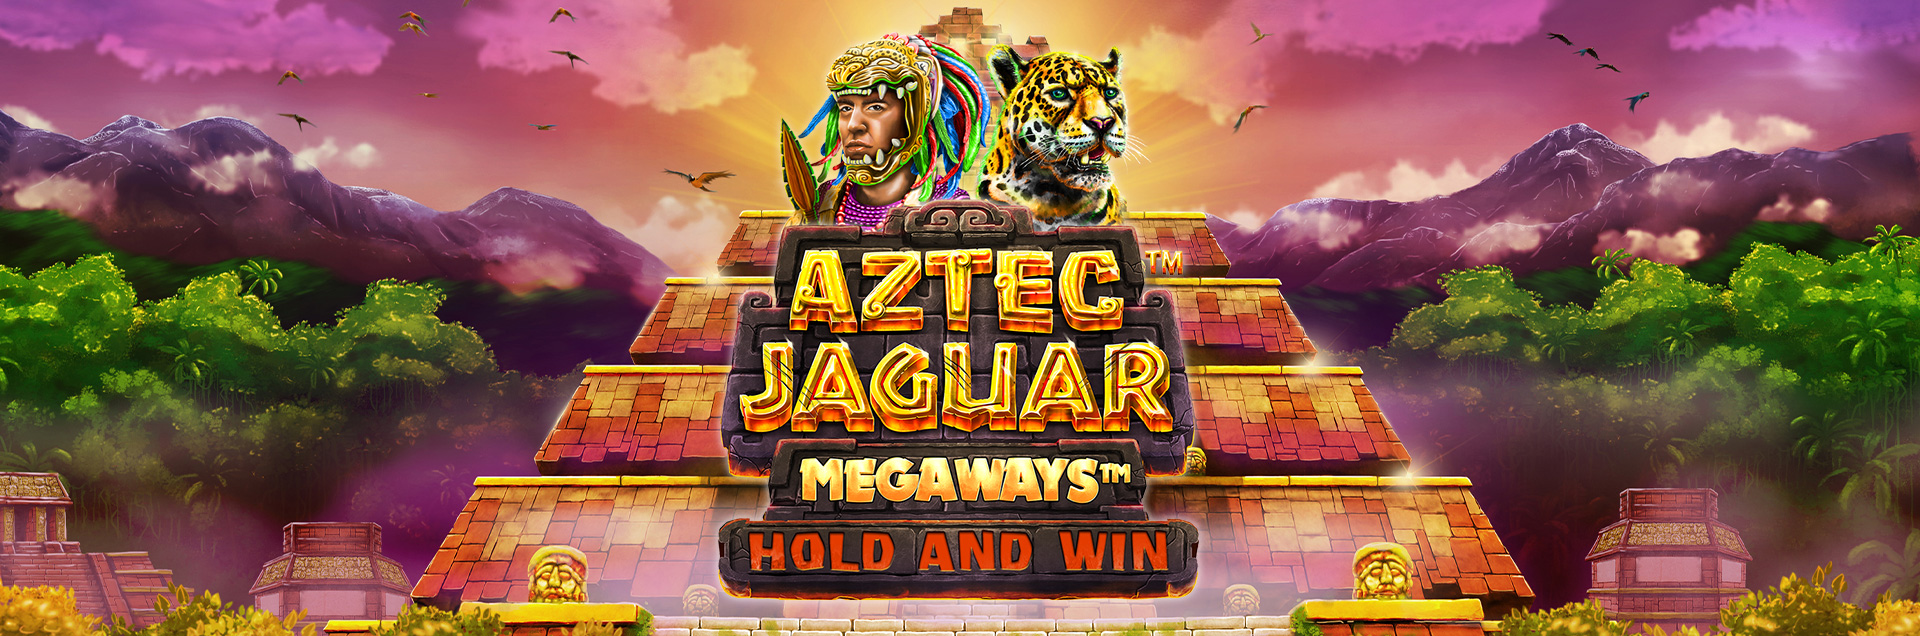 Aztec Jaguar MEGAWAYS homepage